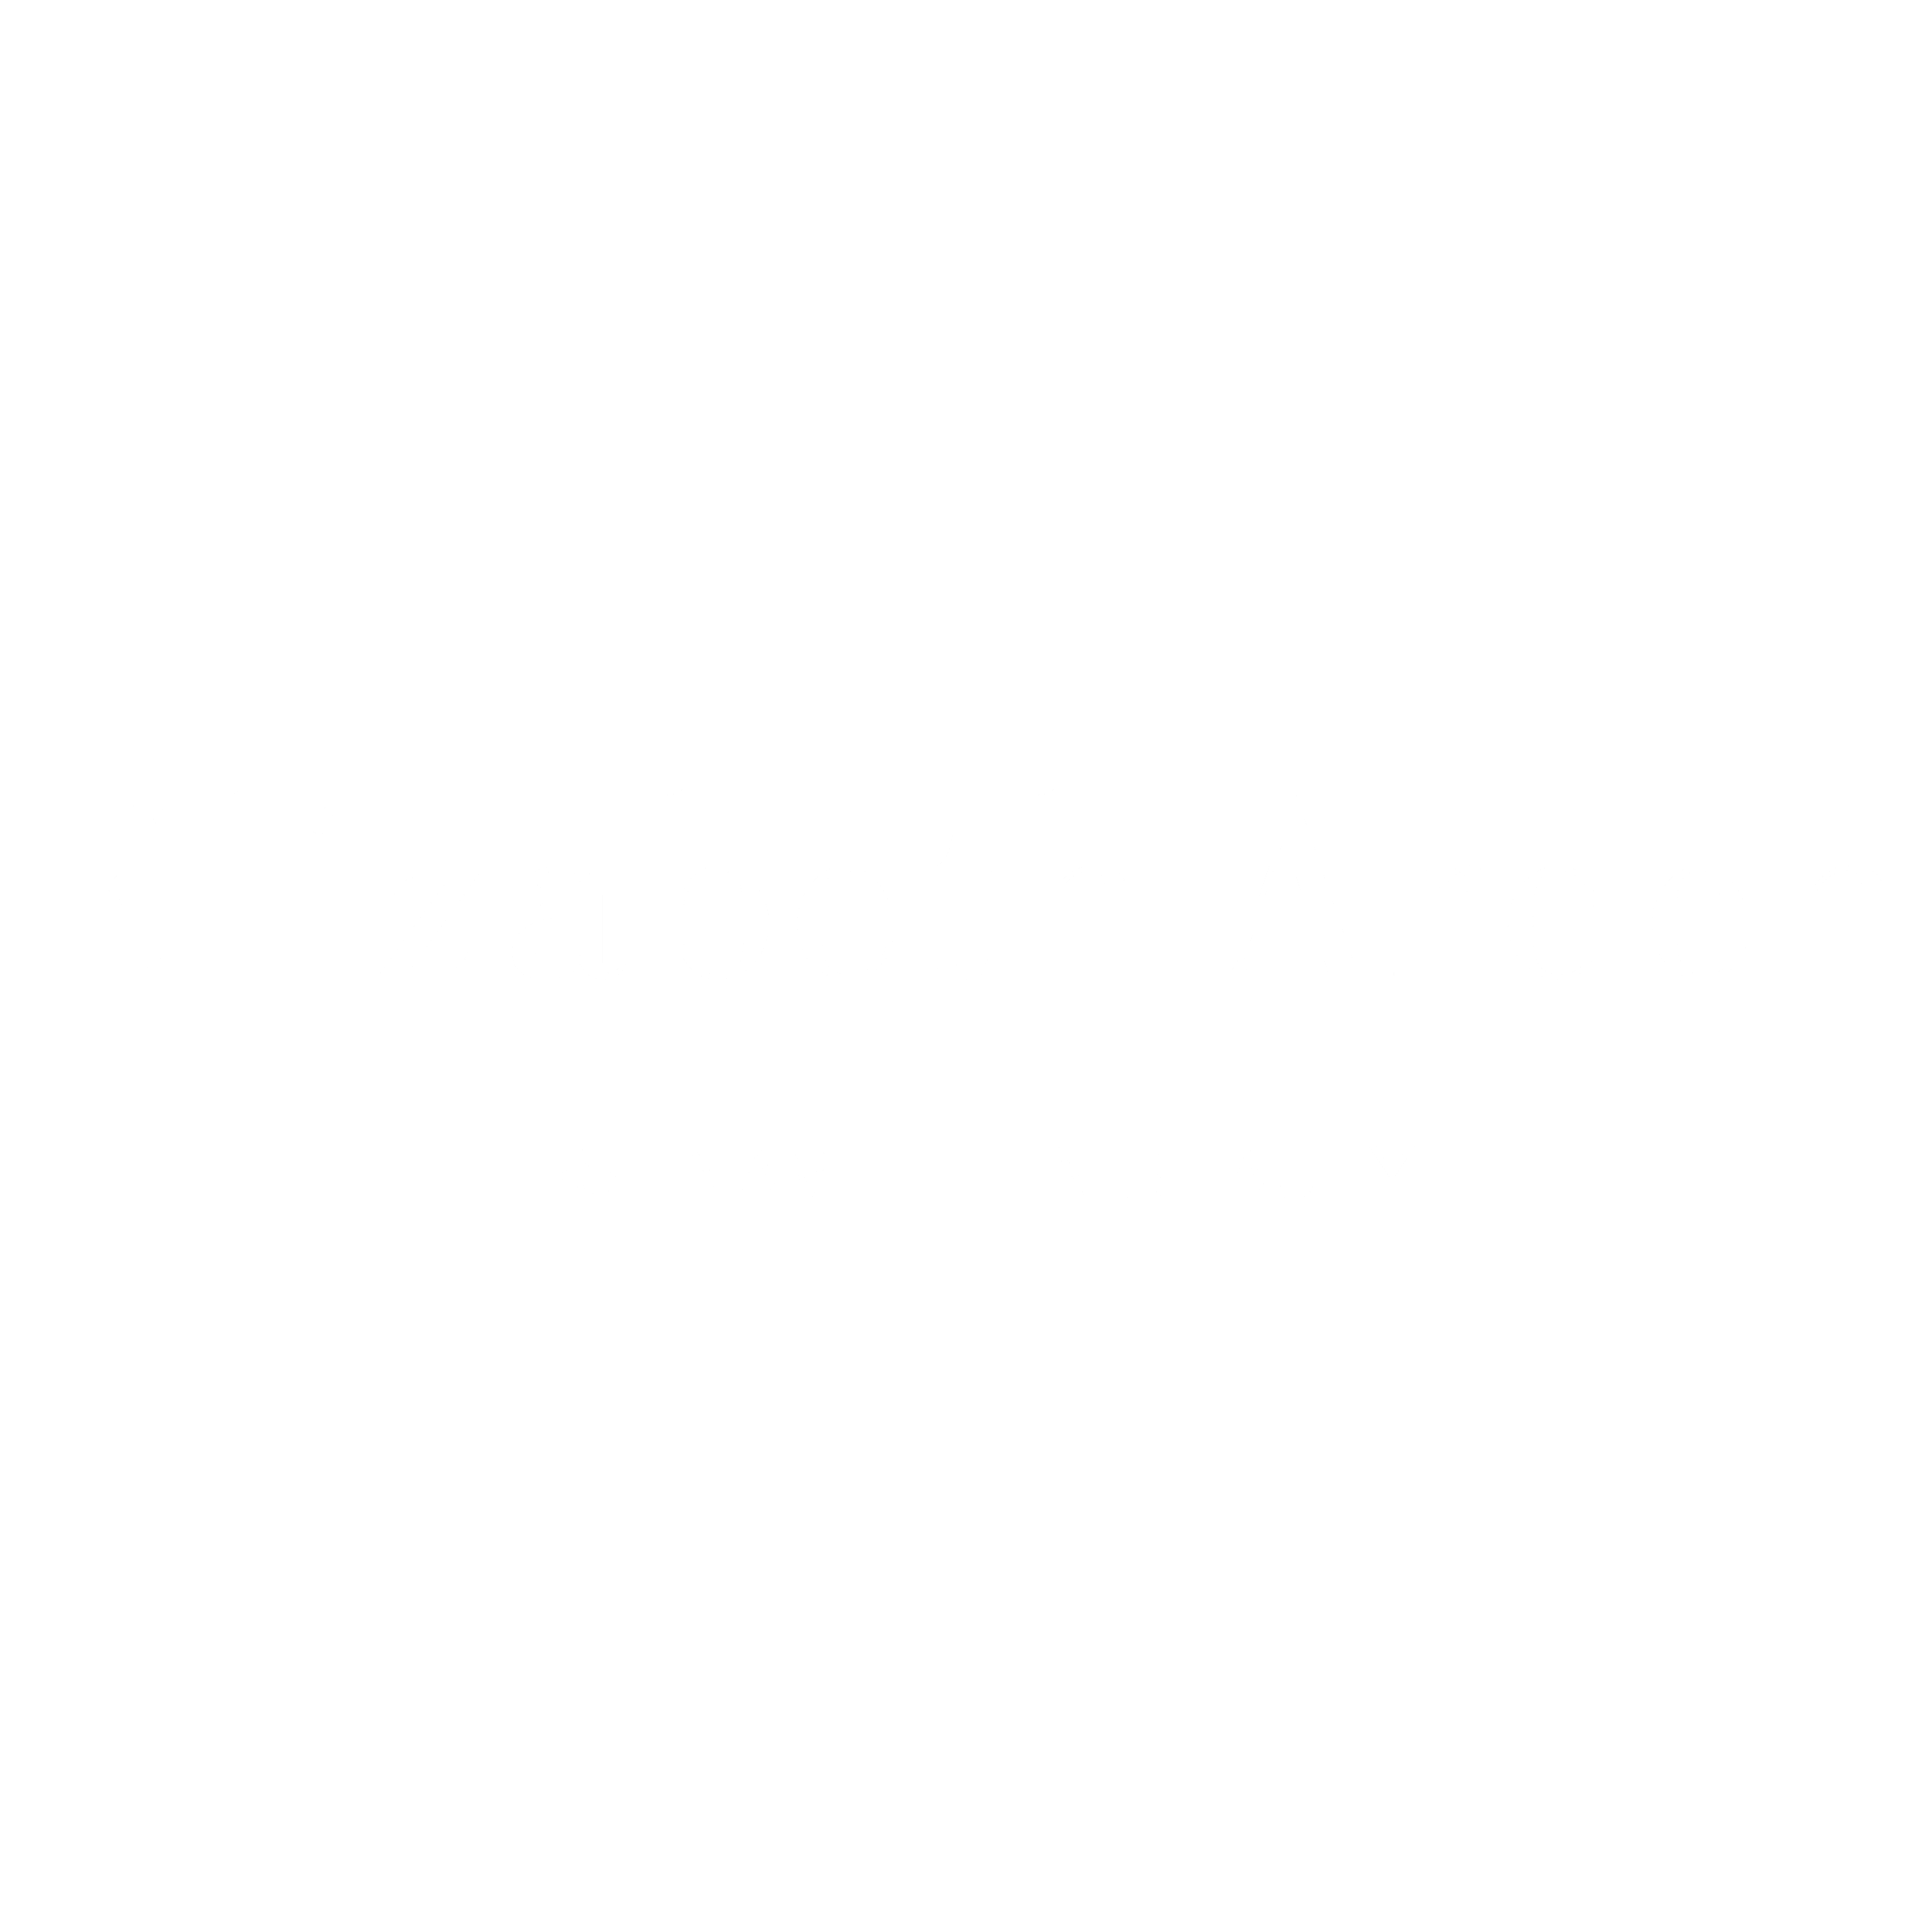 Elizabeth Arden Logo - Elizabeth Arden Logo PNG Transparent & SVG Vector - Freebie Supply